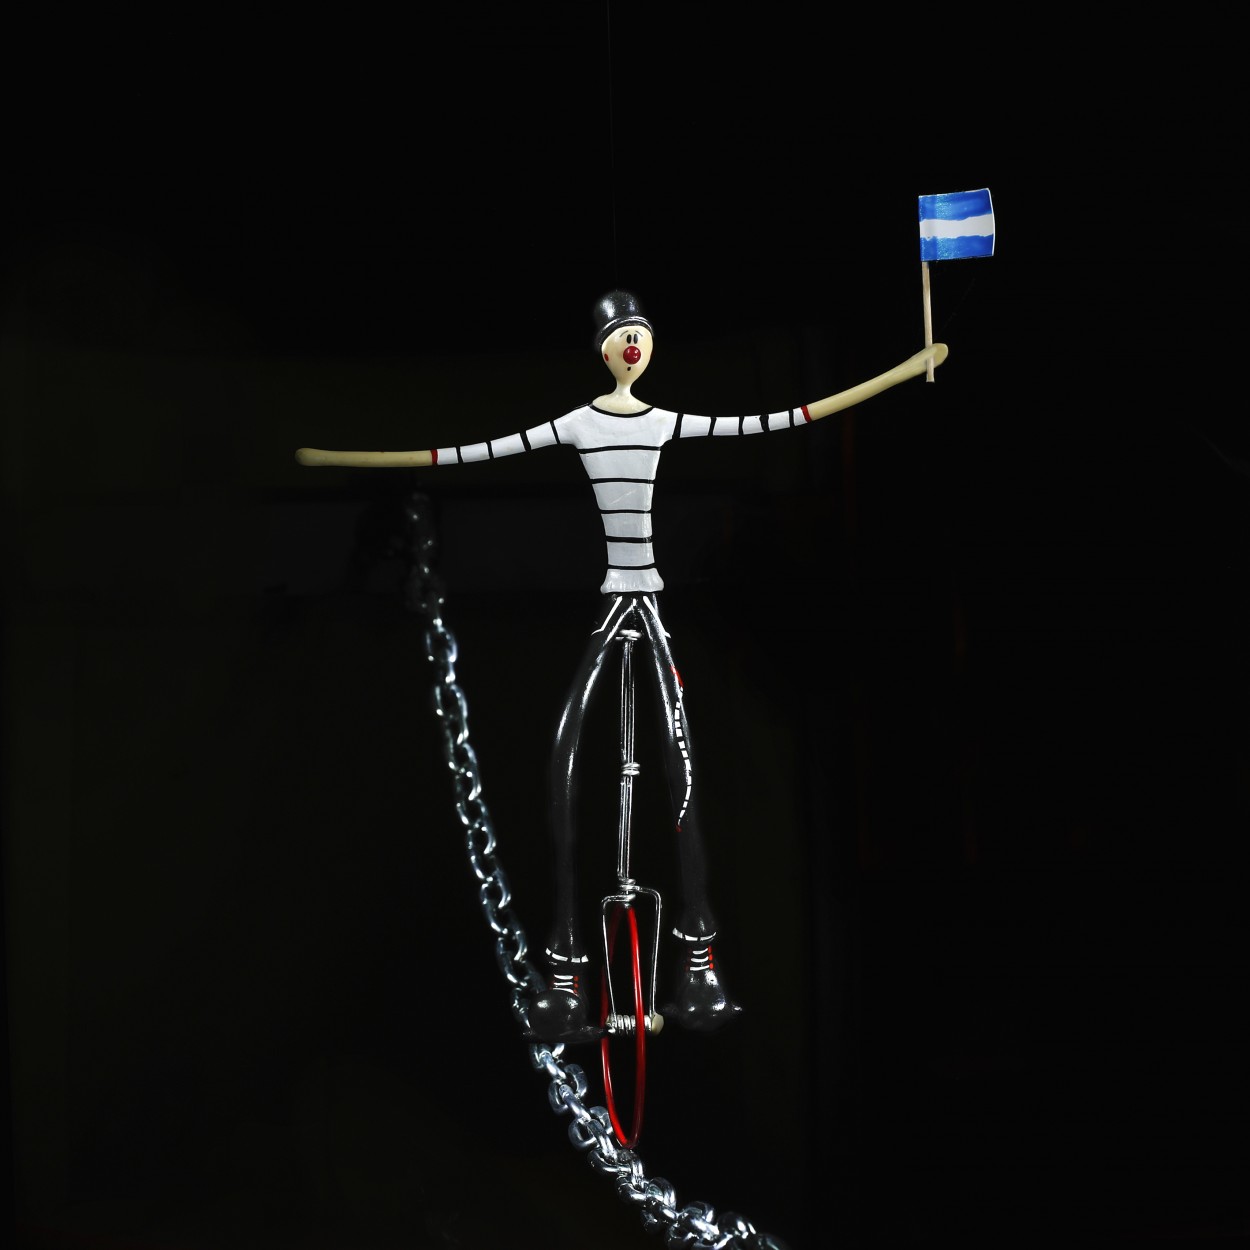 "Equilibrista" de Diego Dadone